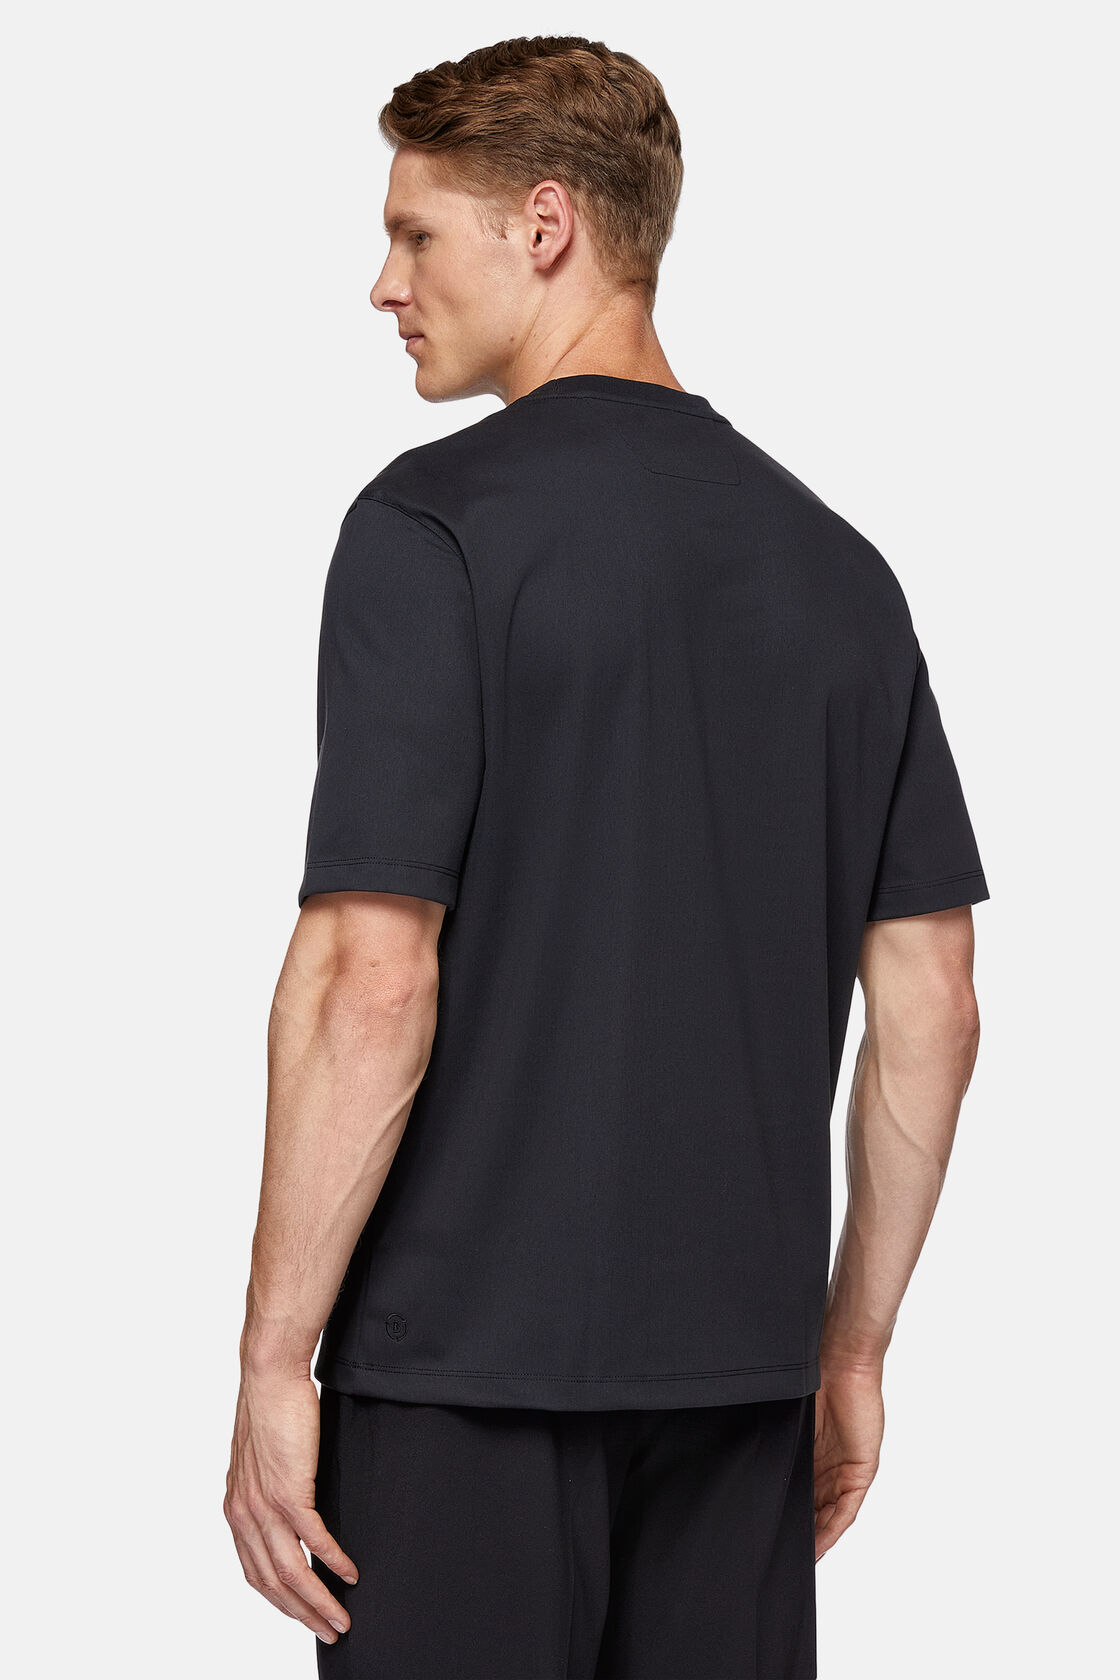 Camiseta Performance Jersey, Carbón, hi-res